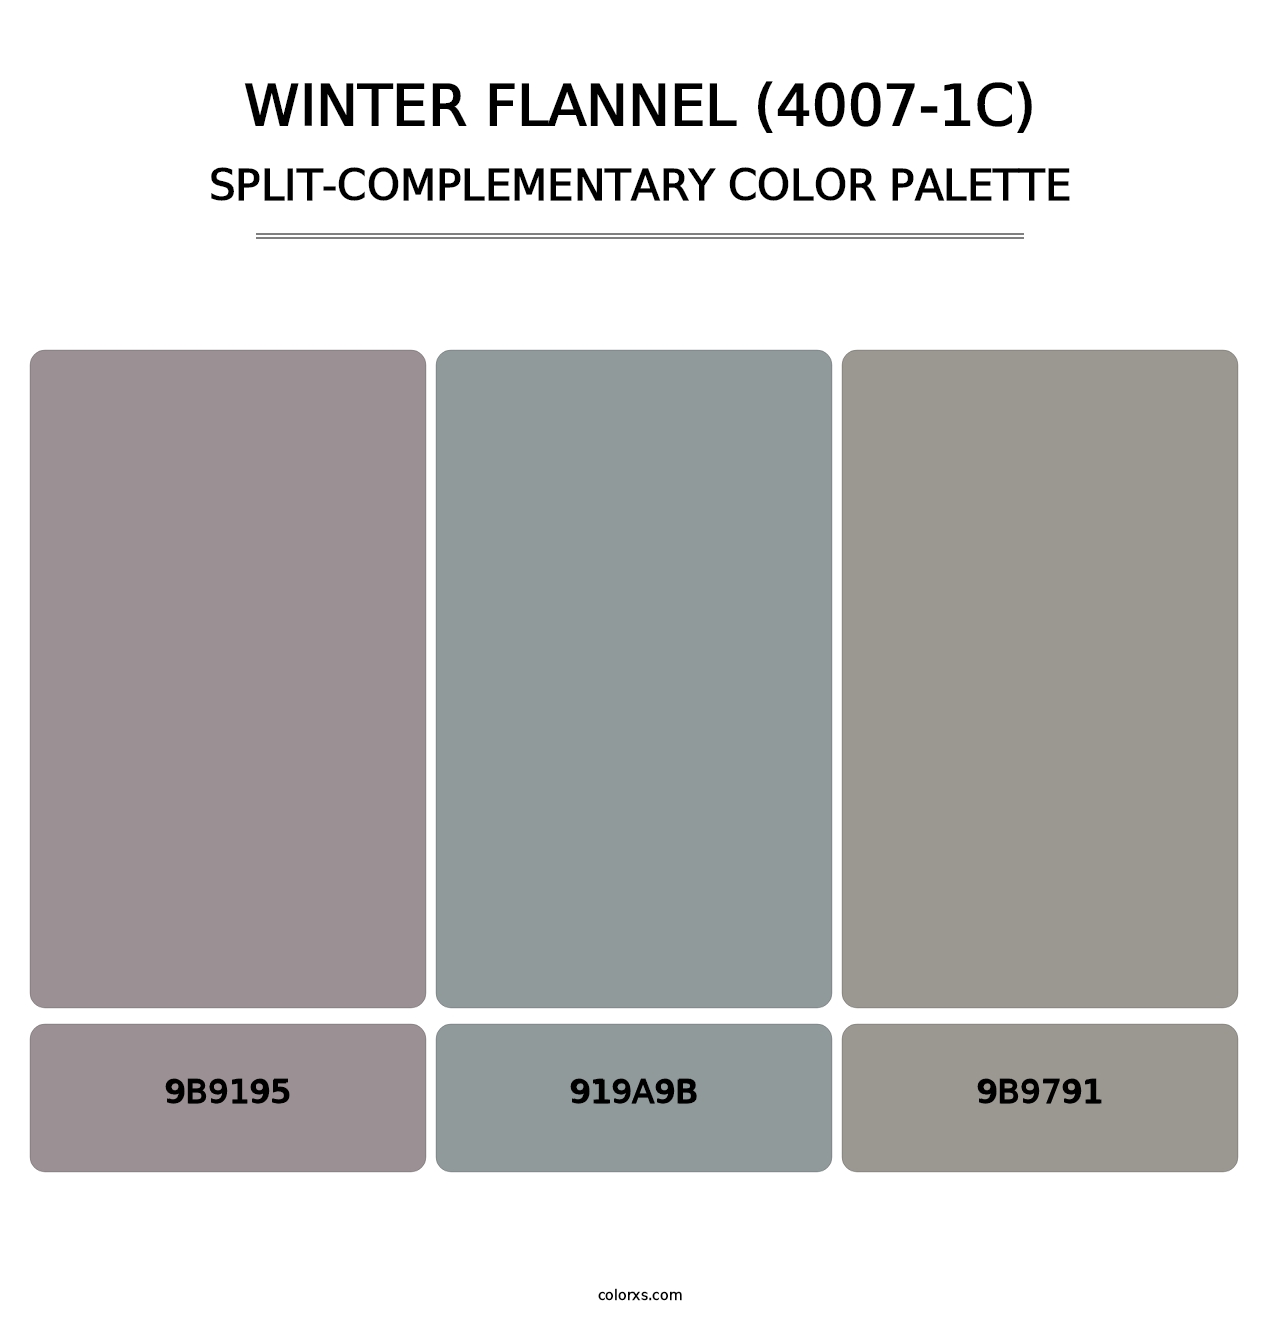 Winter Flannel (4007-1C) - Split-Complementary Color Palette